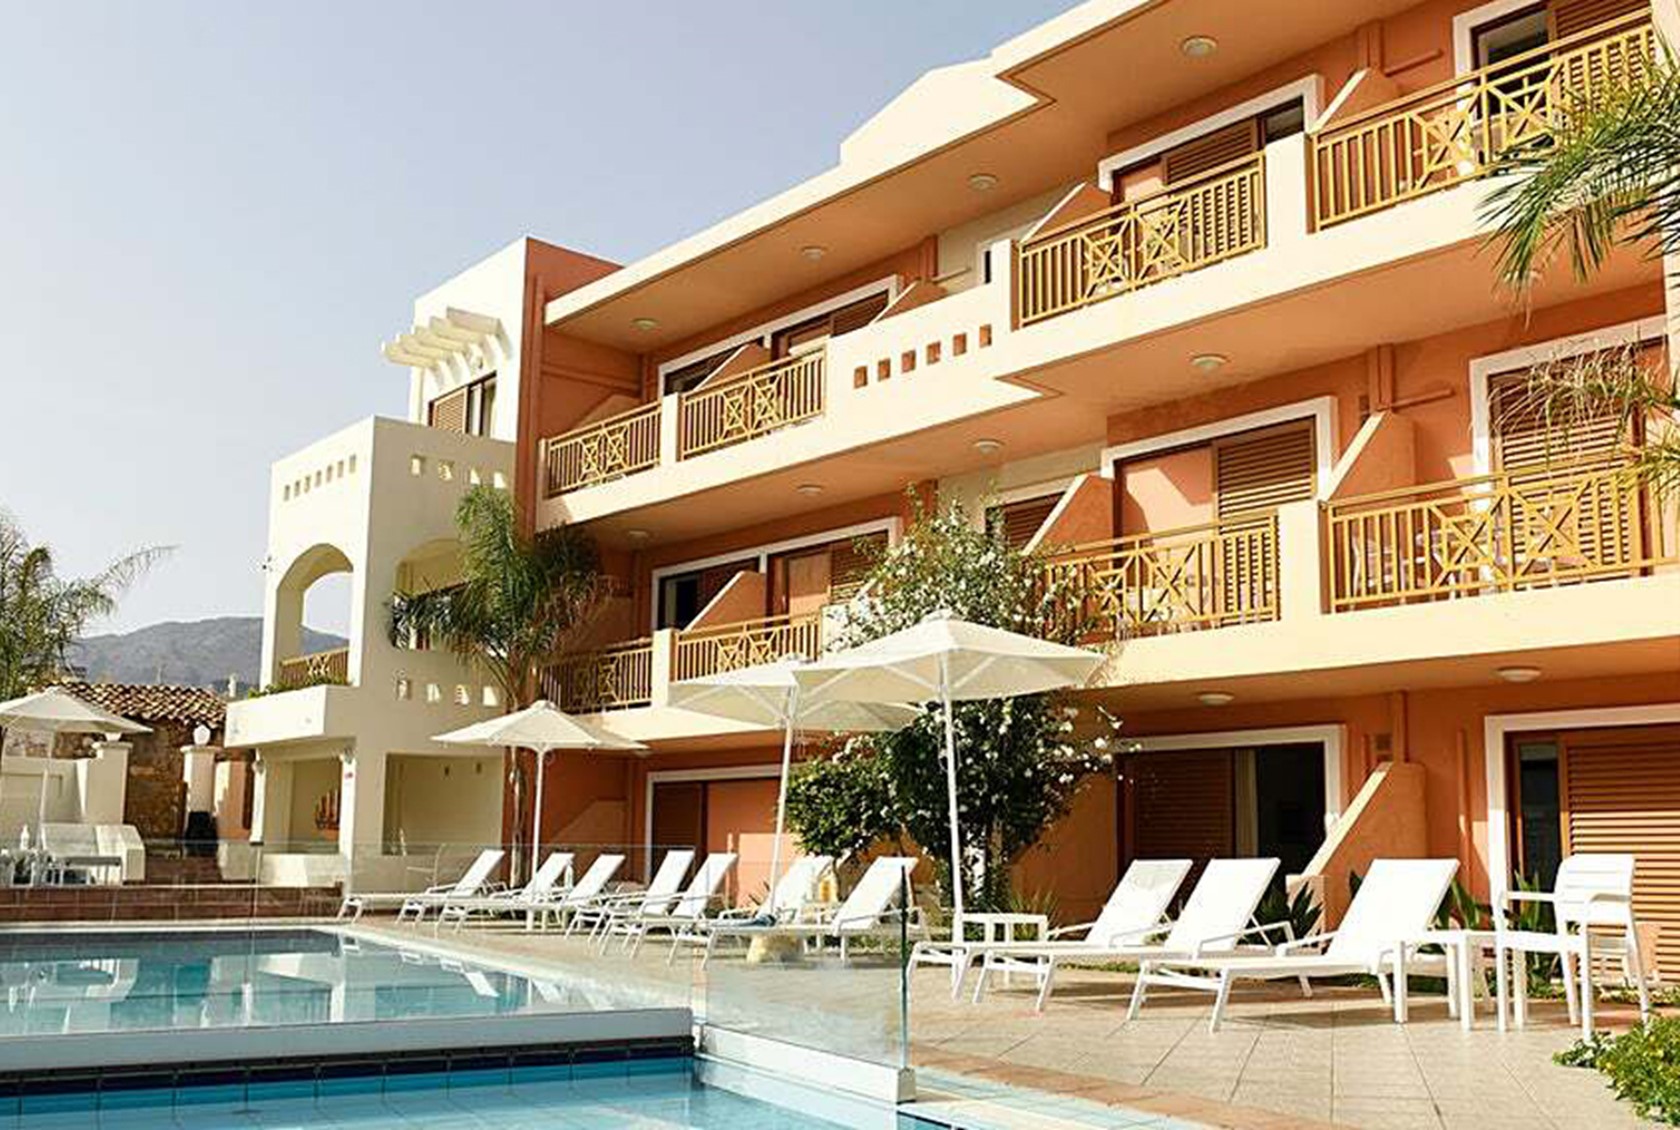 Aristea Hotel Rethymno Crete